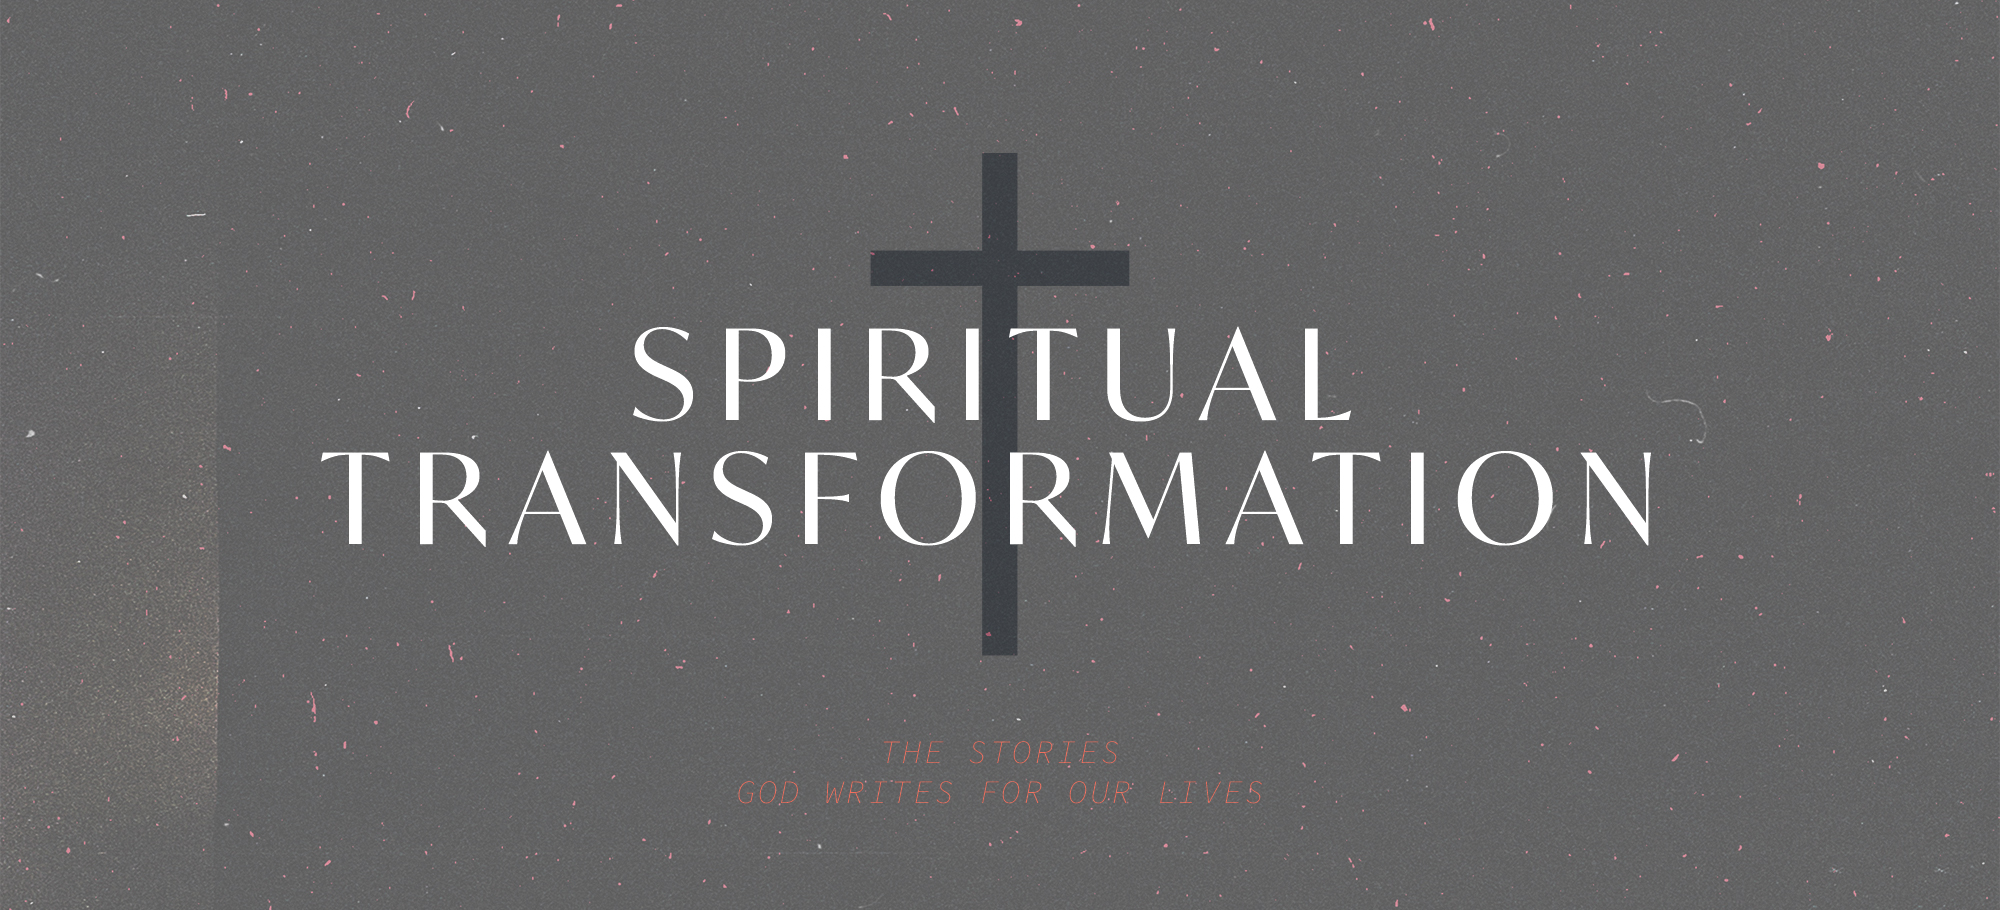 Spiritual Transformation Testimonies